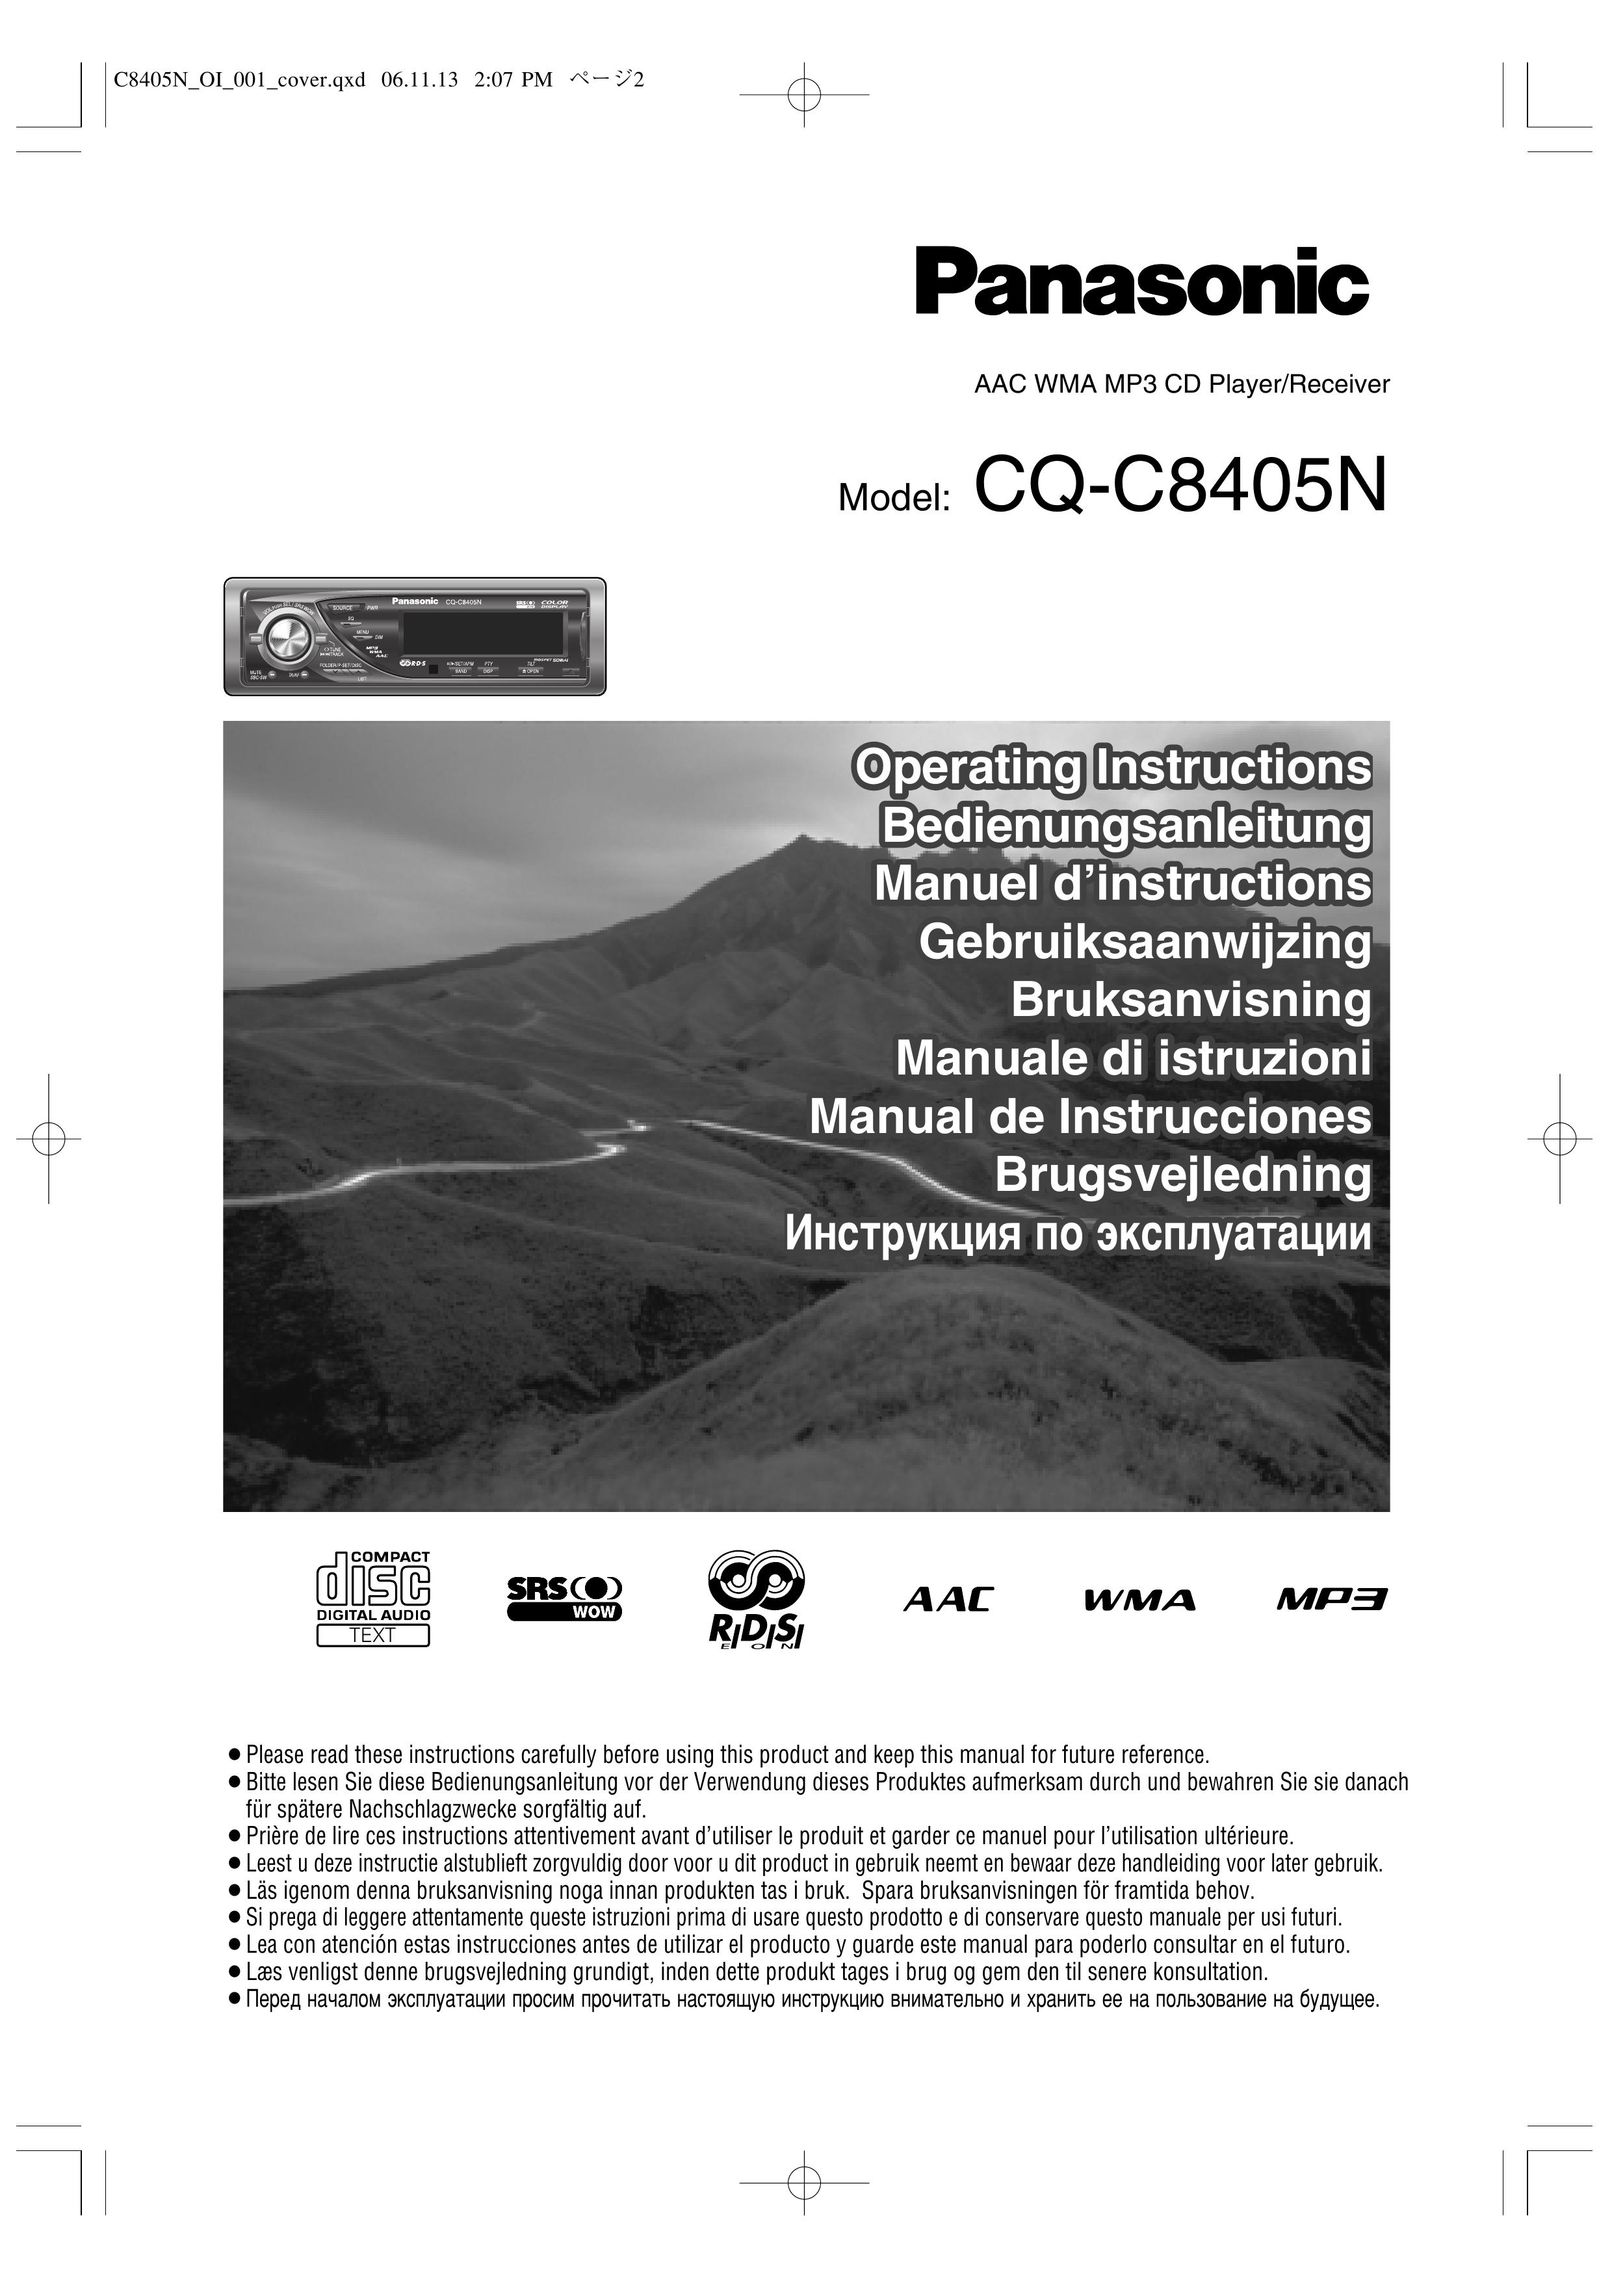 Panasonic CQ-C8405N MP3 Player User Manual